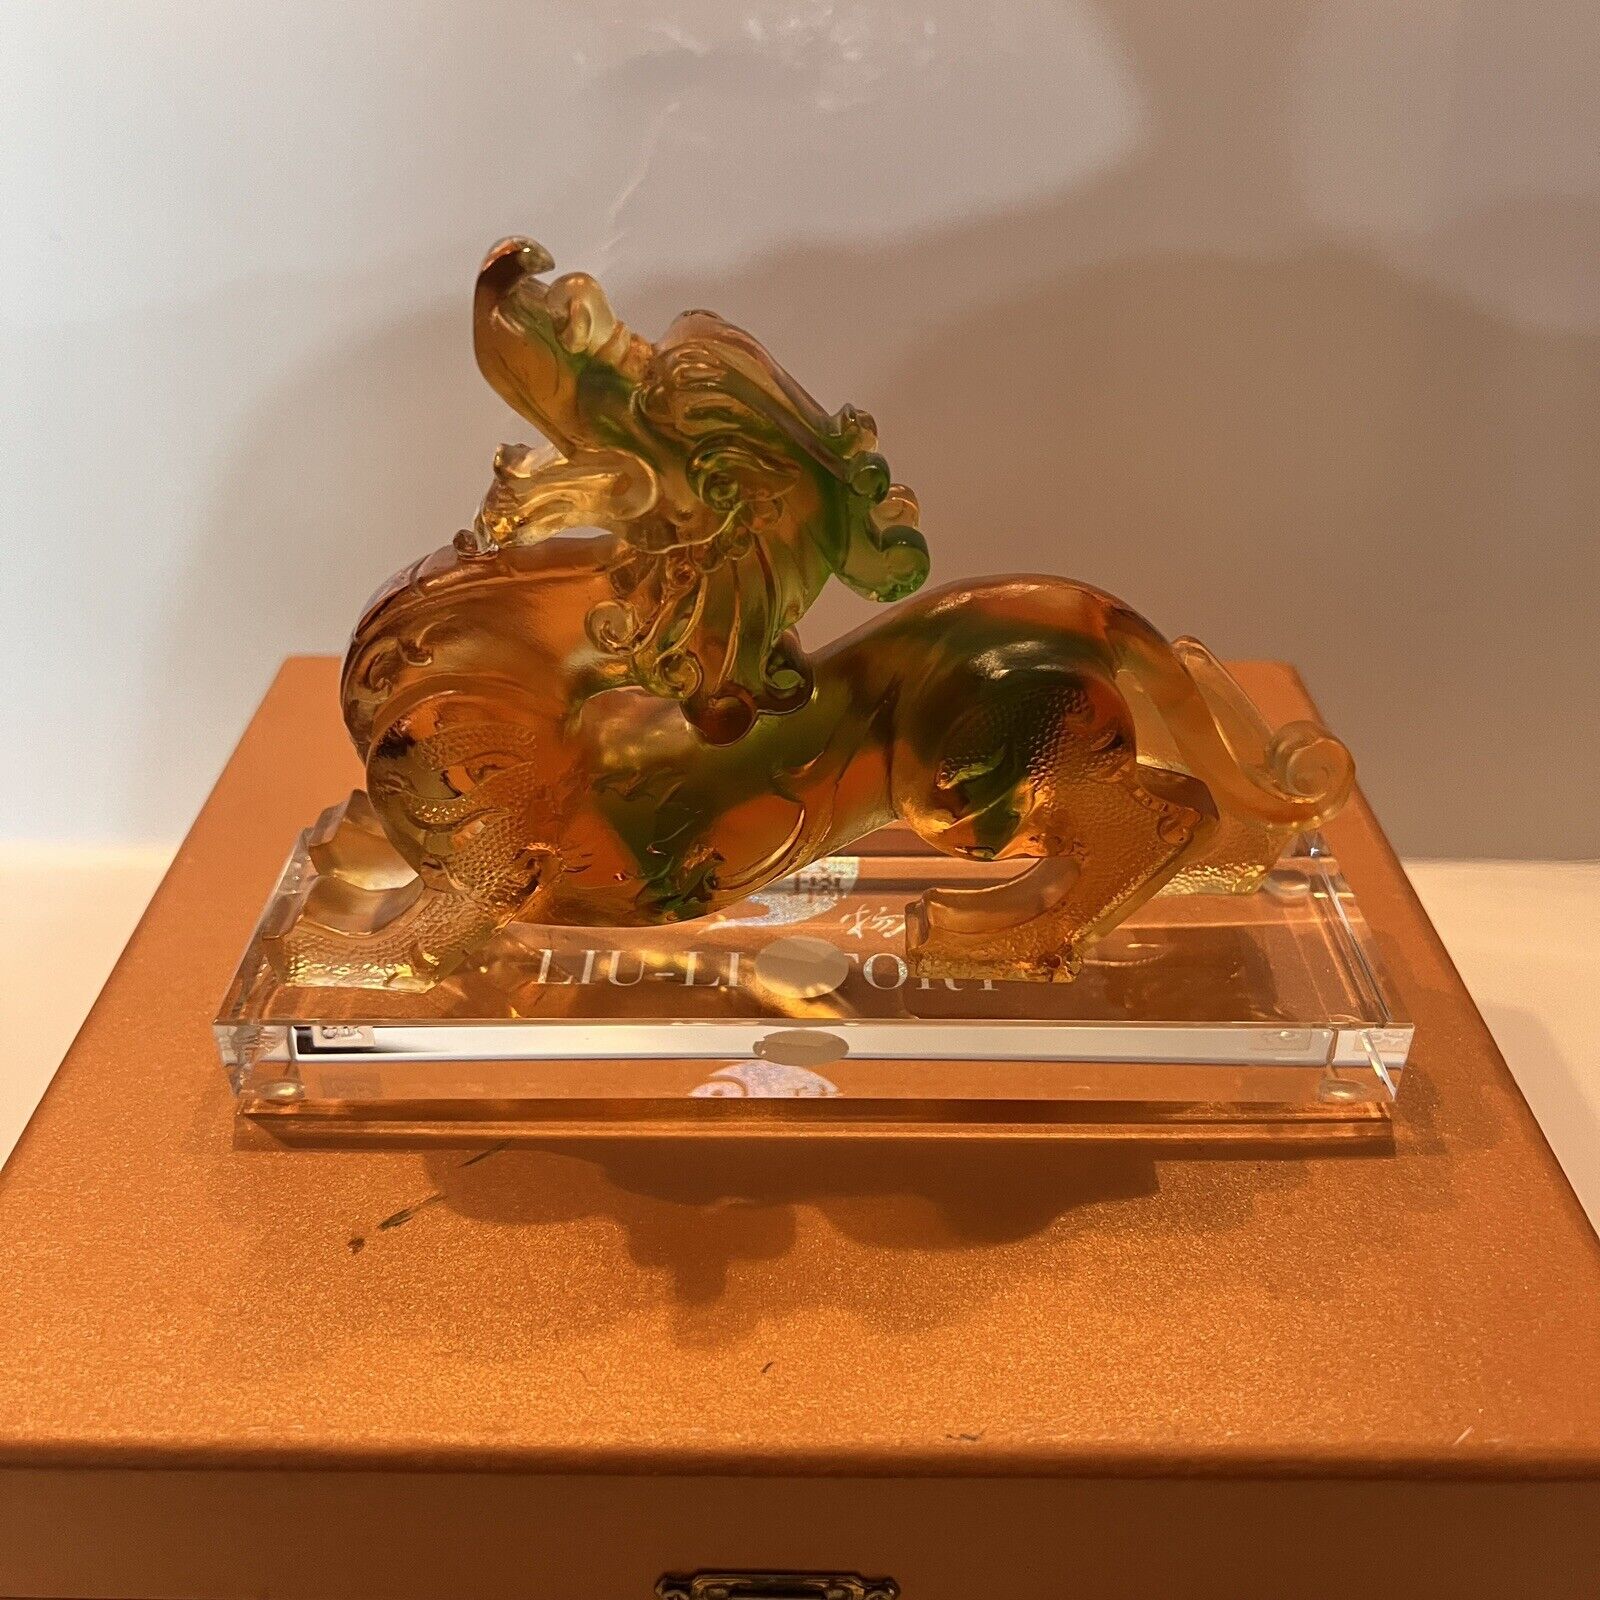 Liu-Li Story Crystal Dragon sculpture crystal glass